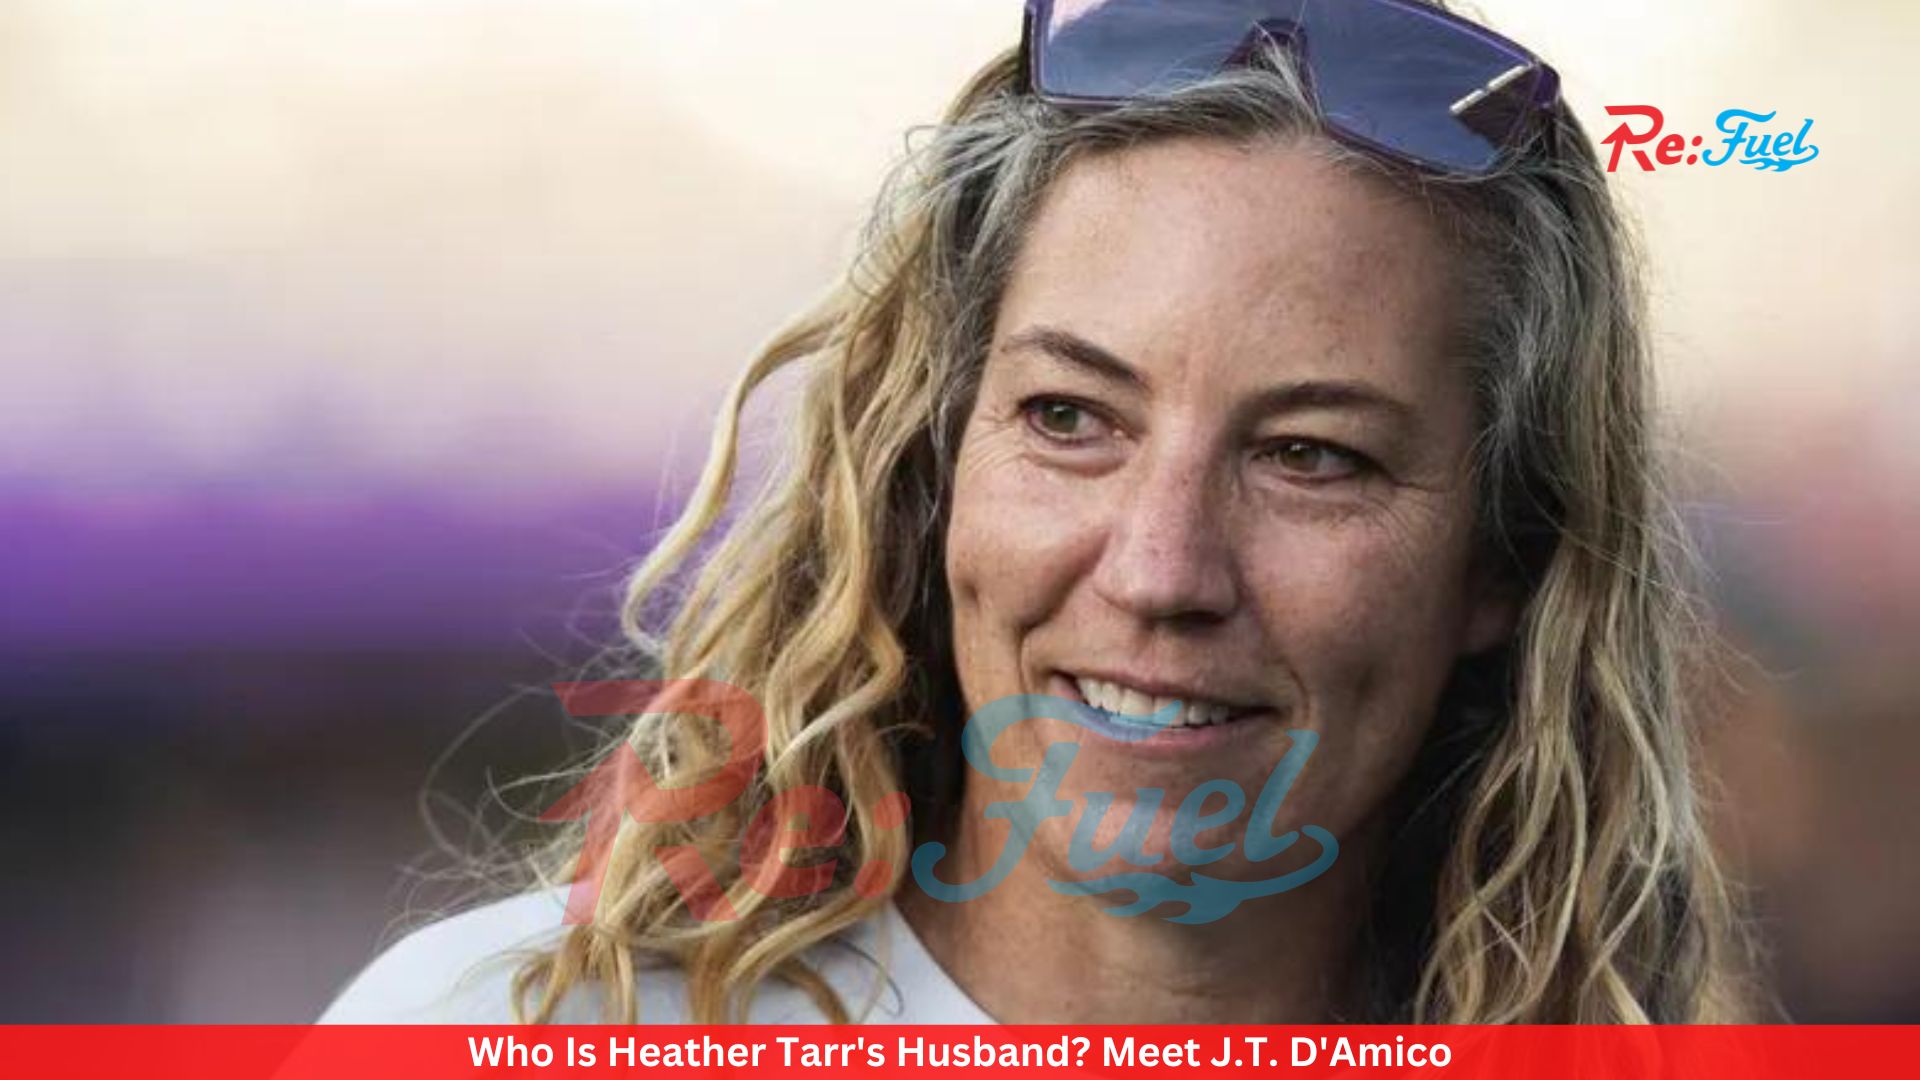 Who Is Heather Tarr's Husband? Meet J.T. D'Amico